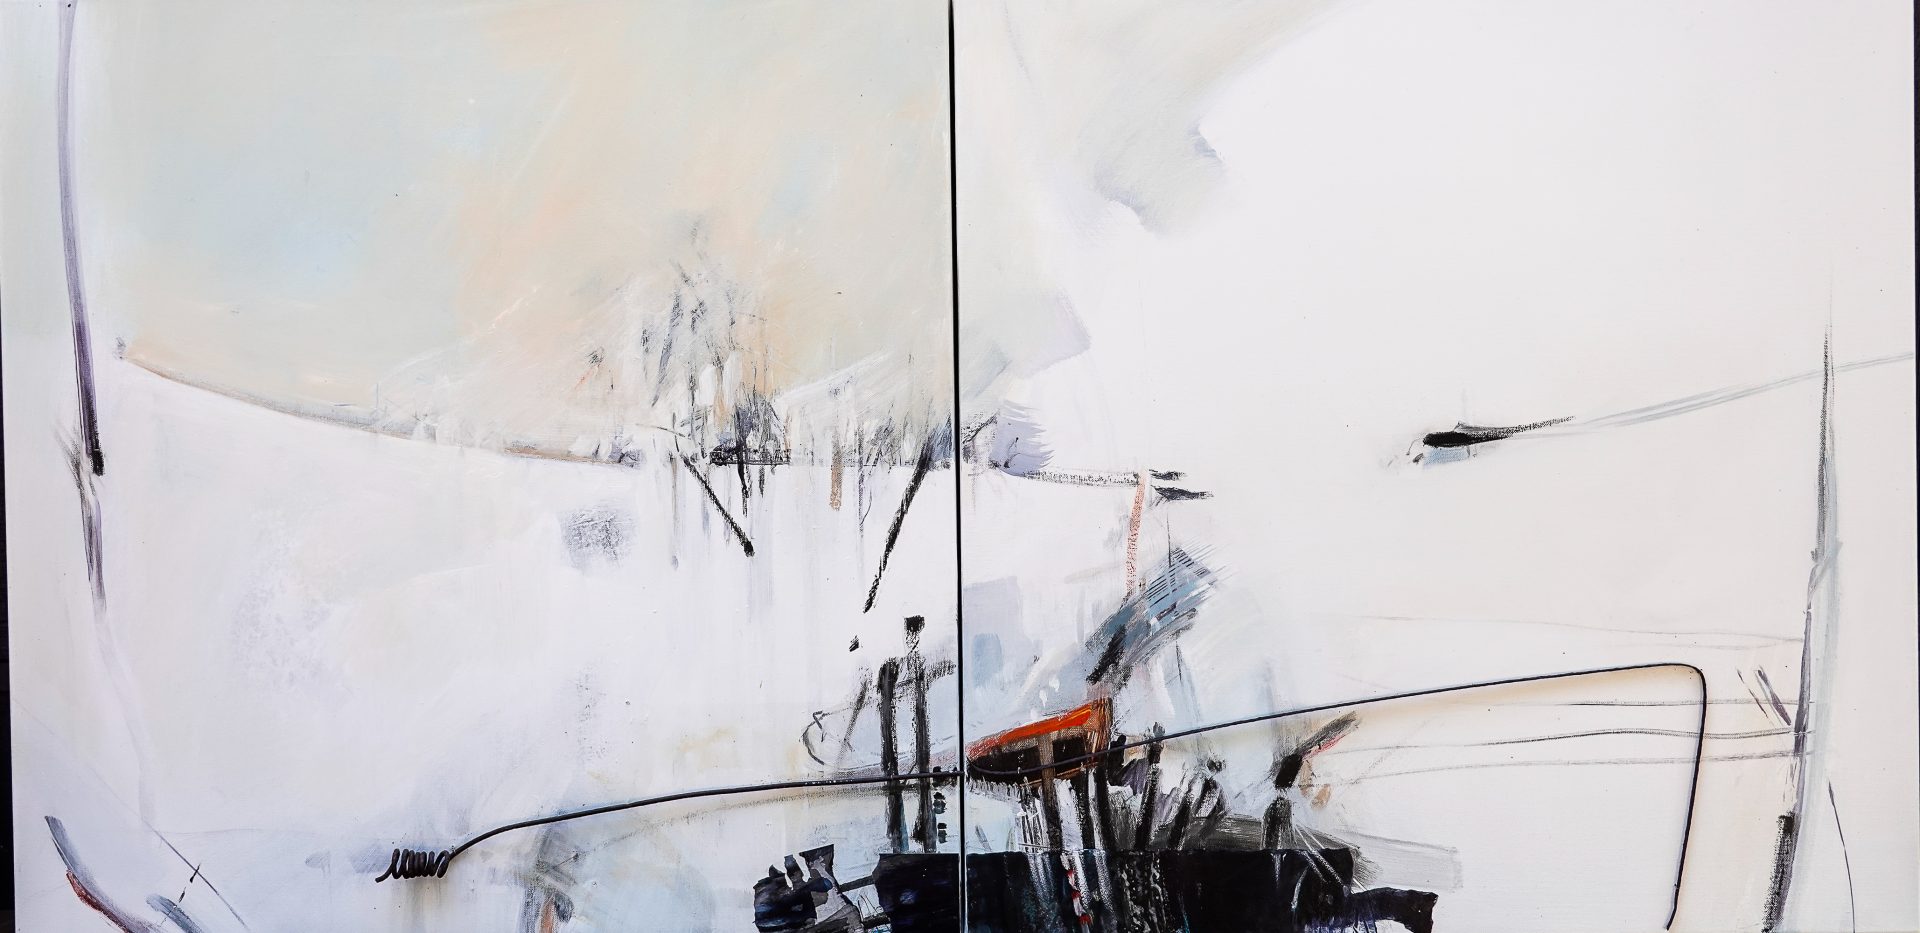 Fences down | Pam Walpole | Mixed media on canvas | 76 x 152 cm diptych. | $3300